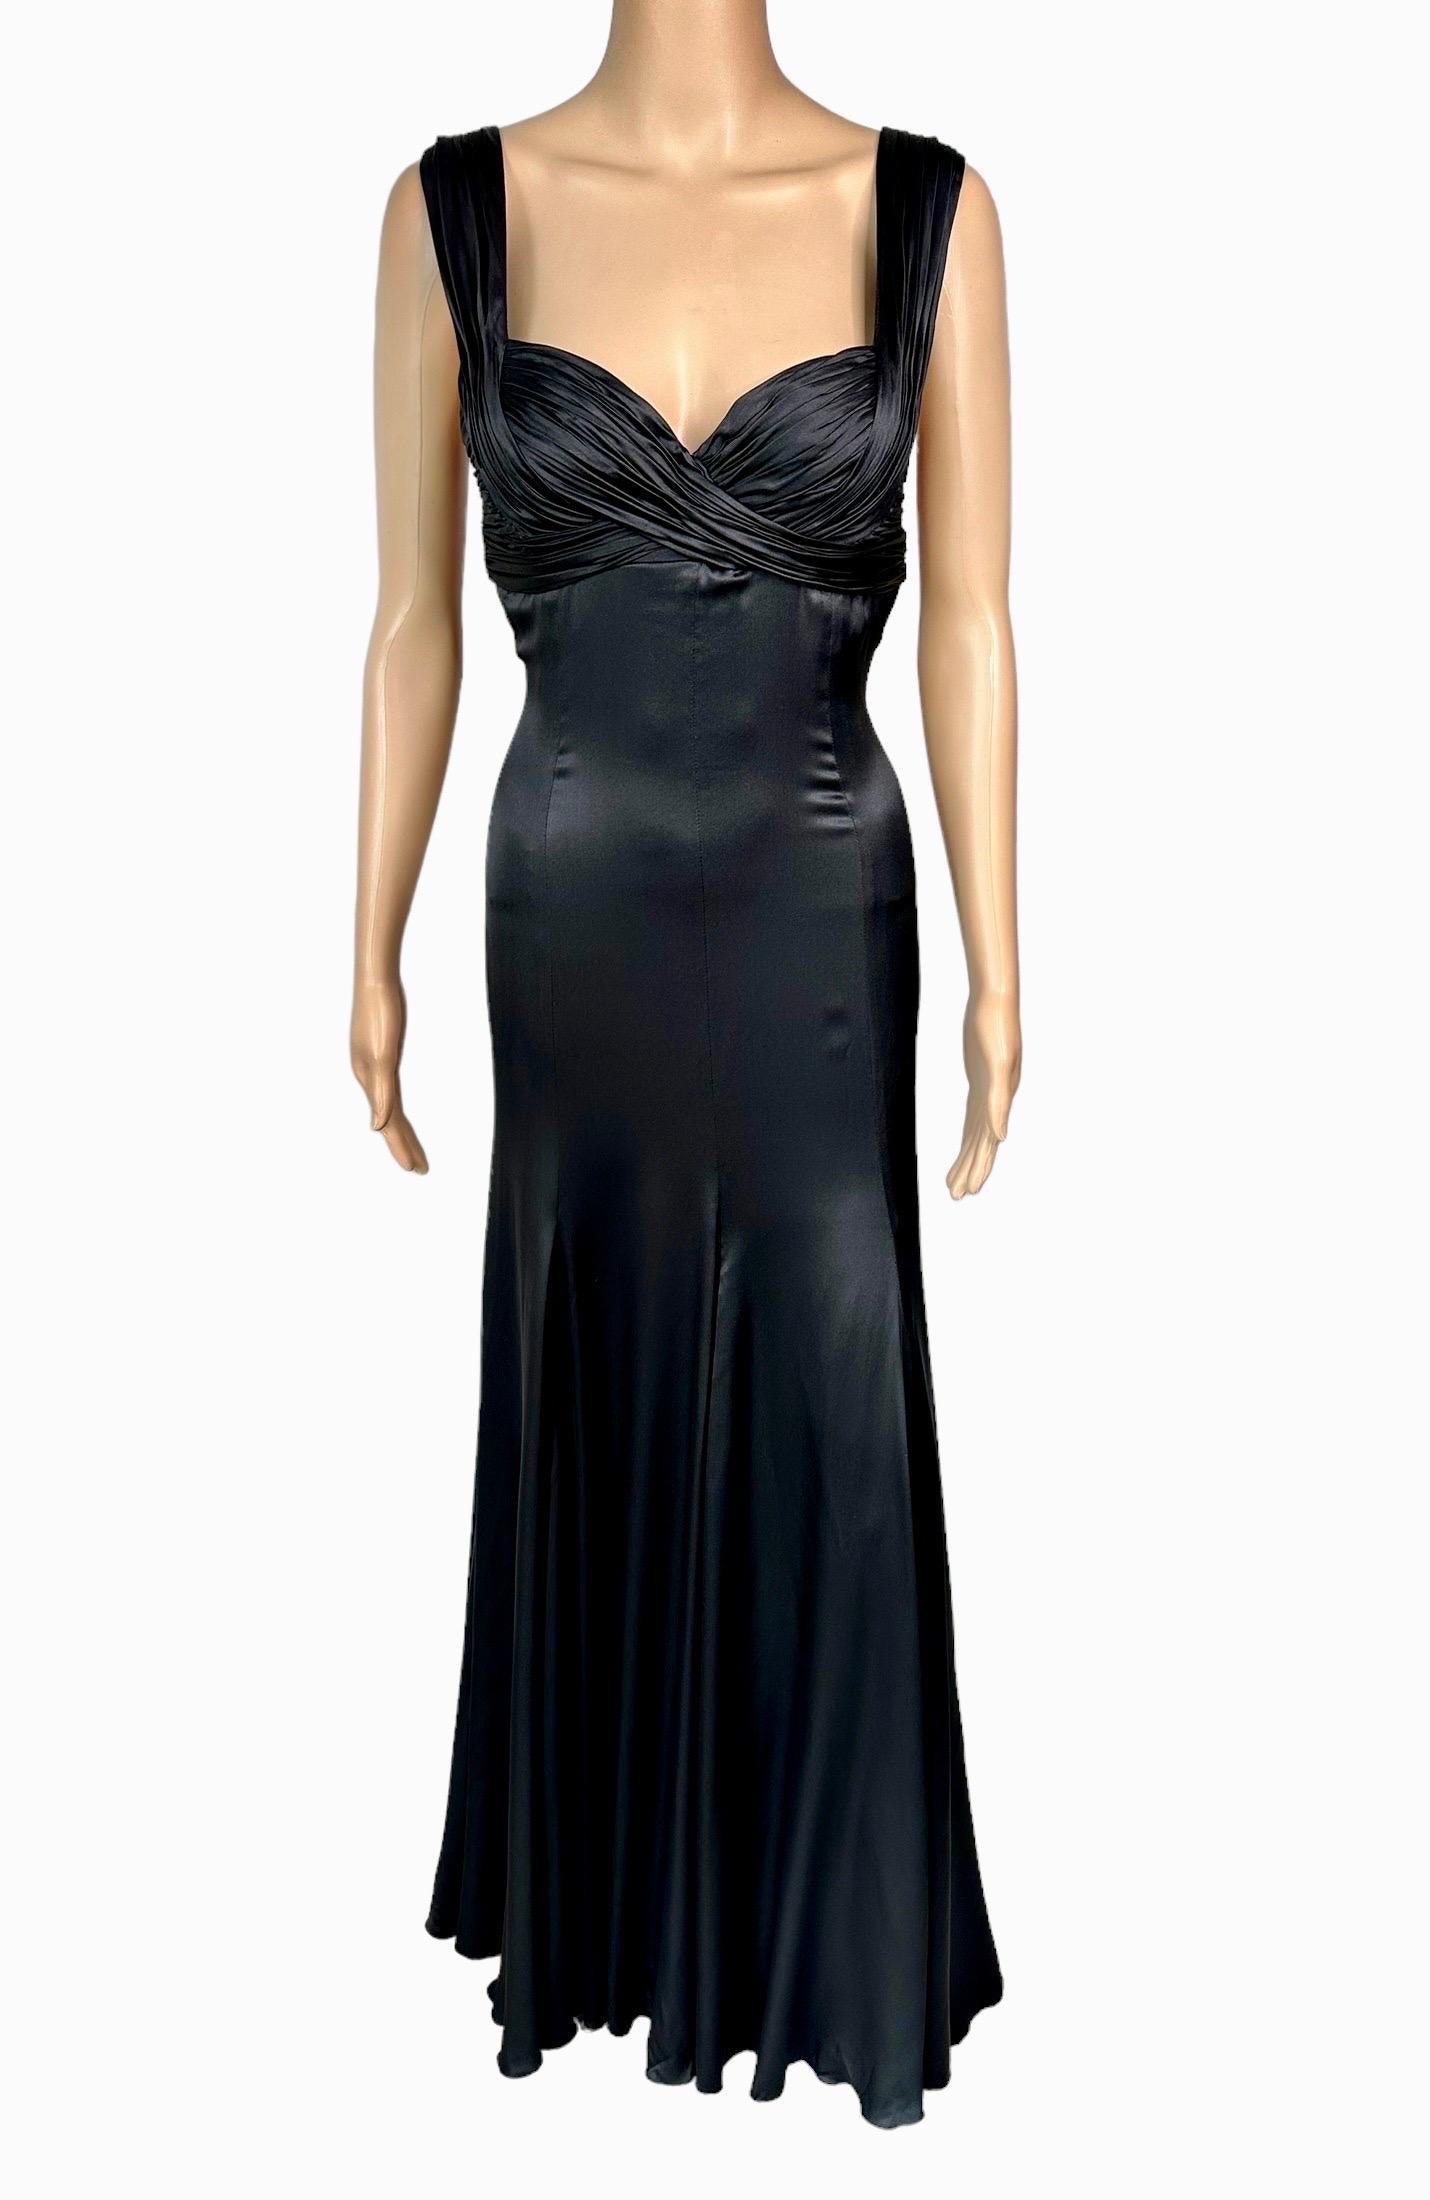 Versace S/S 2006 Bustier High Slit Black Evening Dress Gown IT 42

